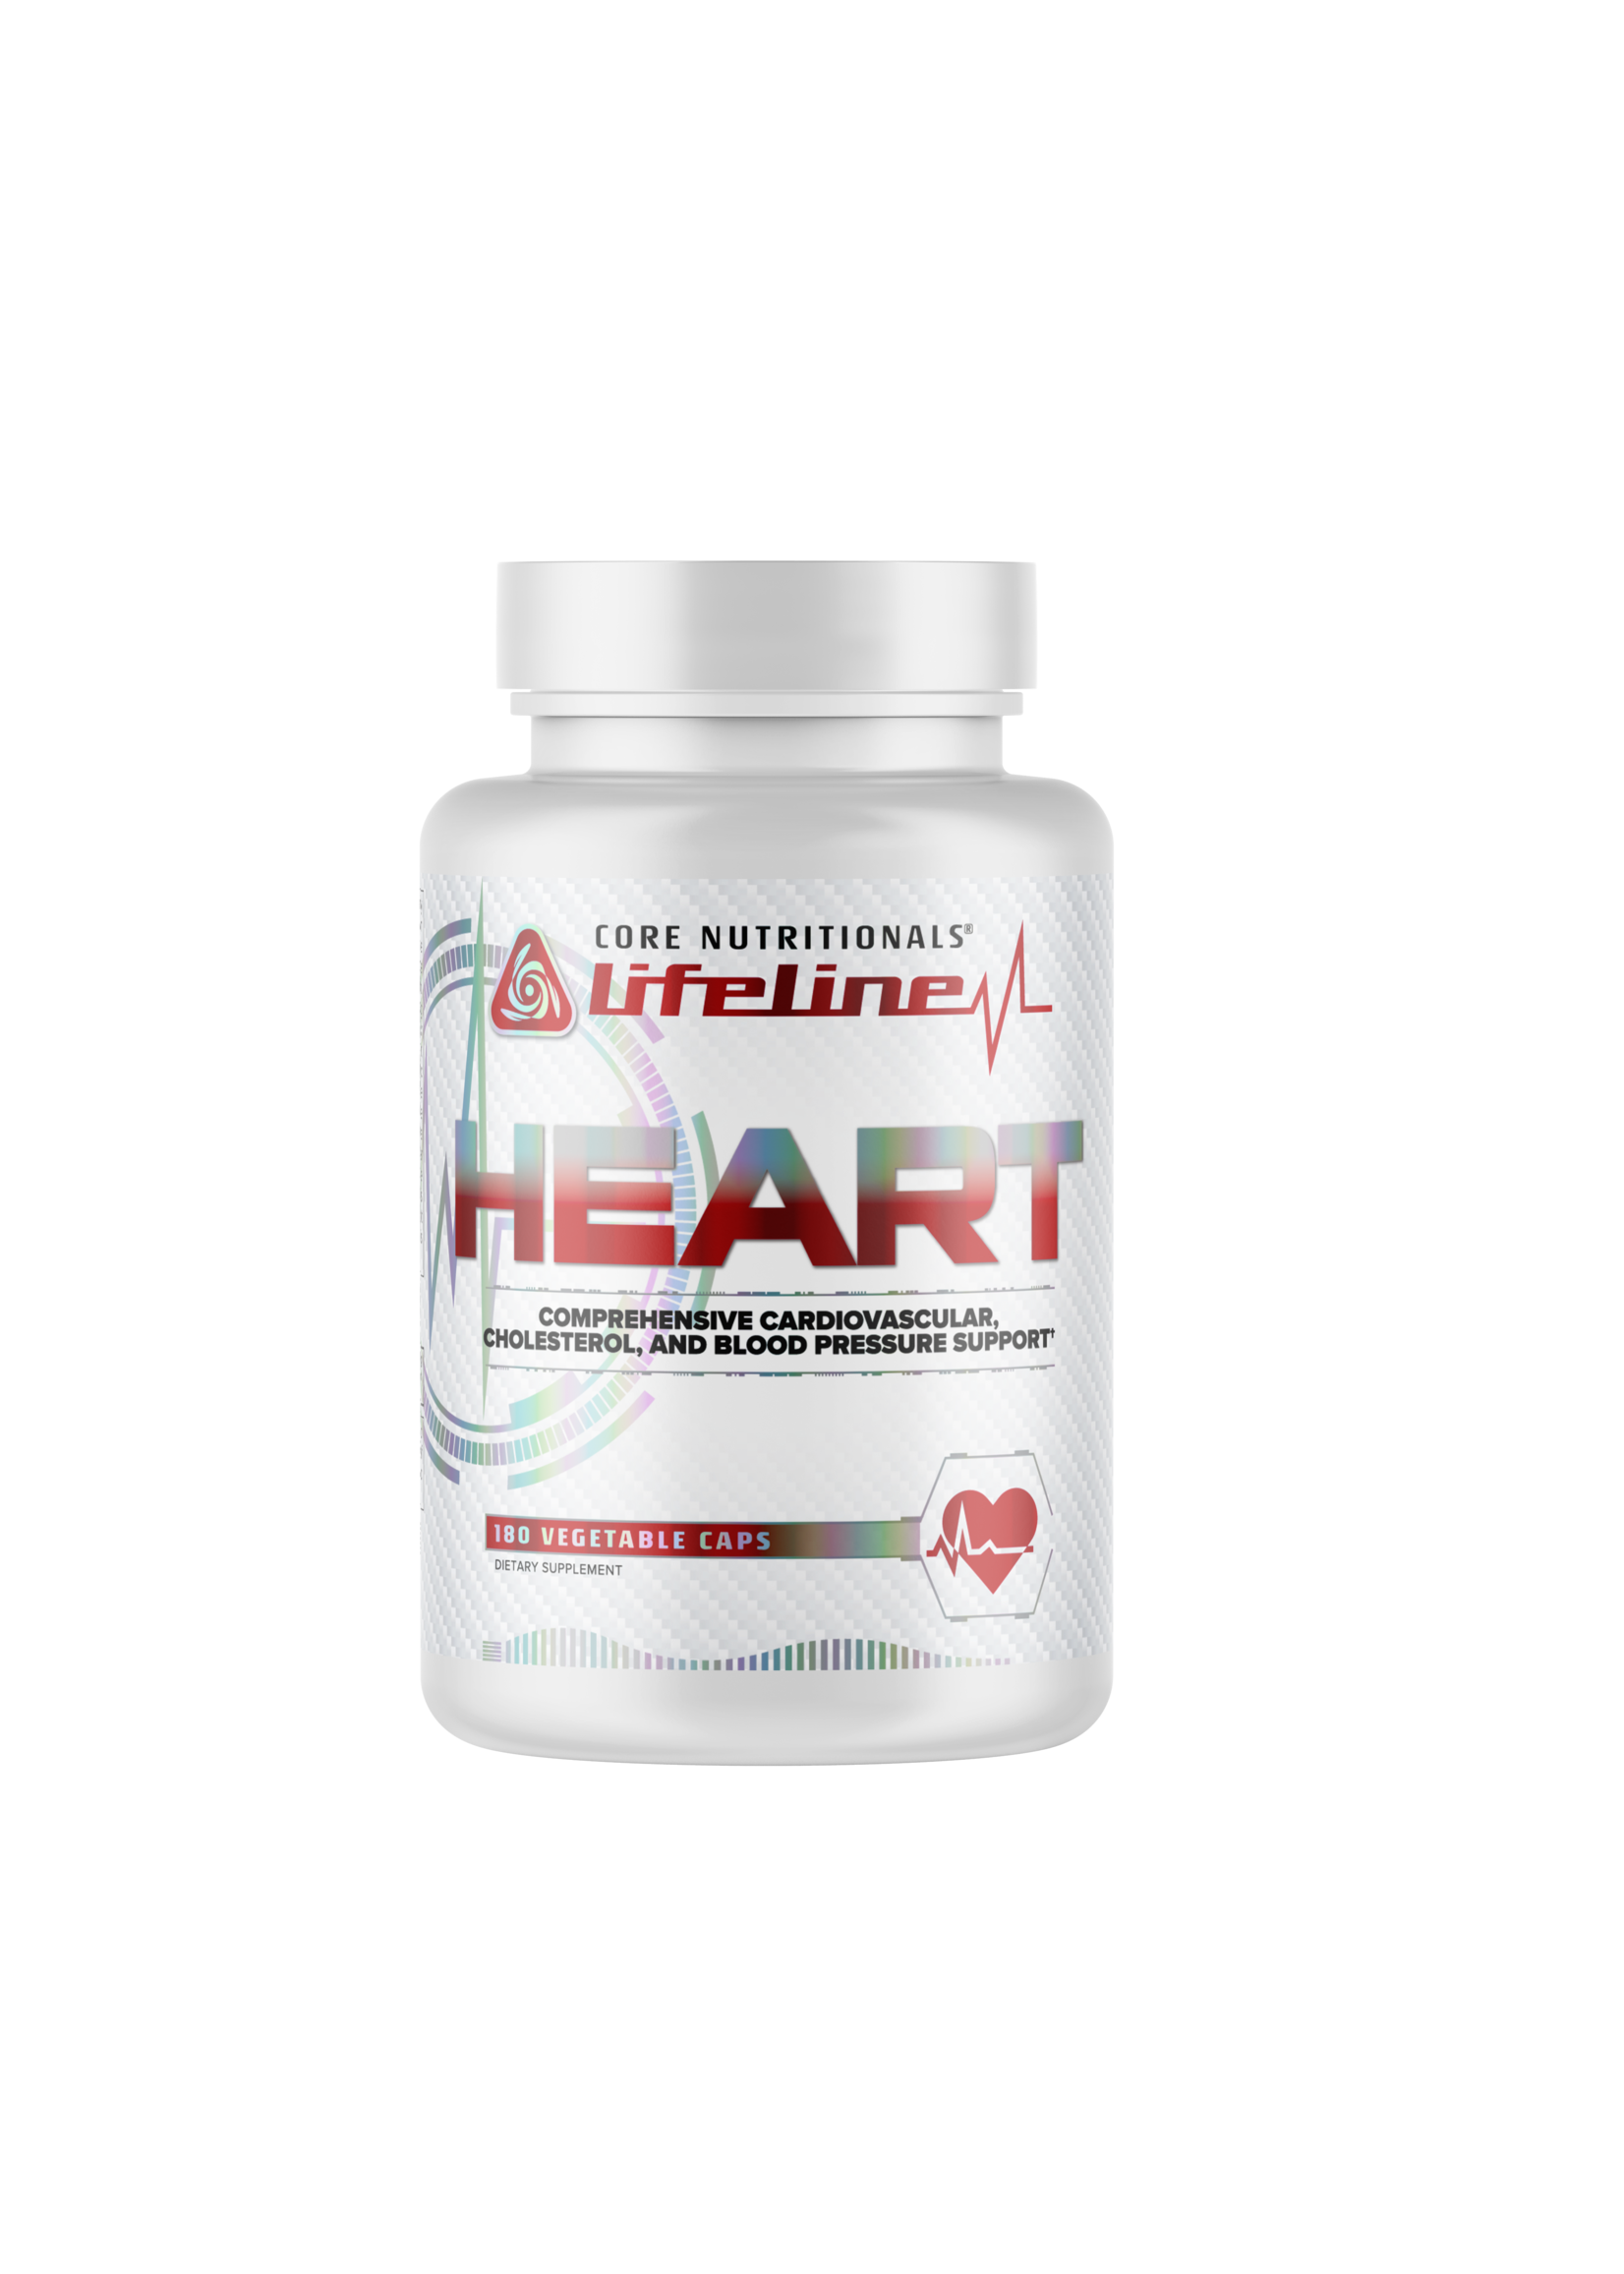 Core Nutritionals Core Heart